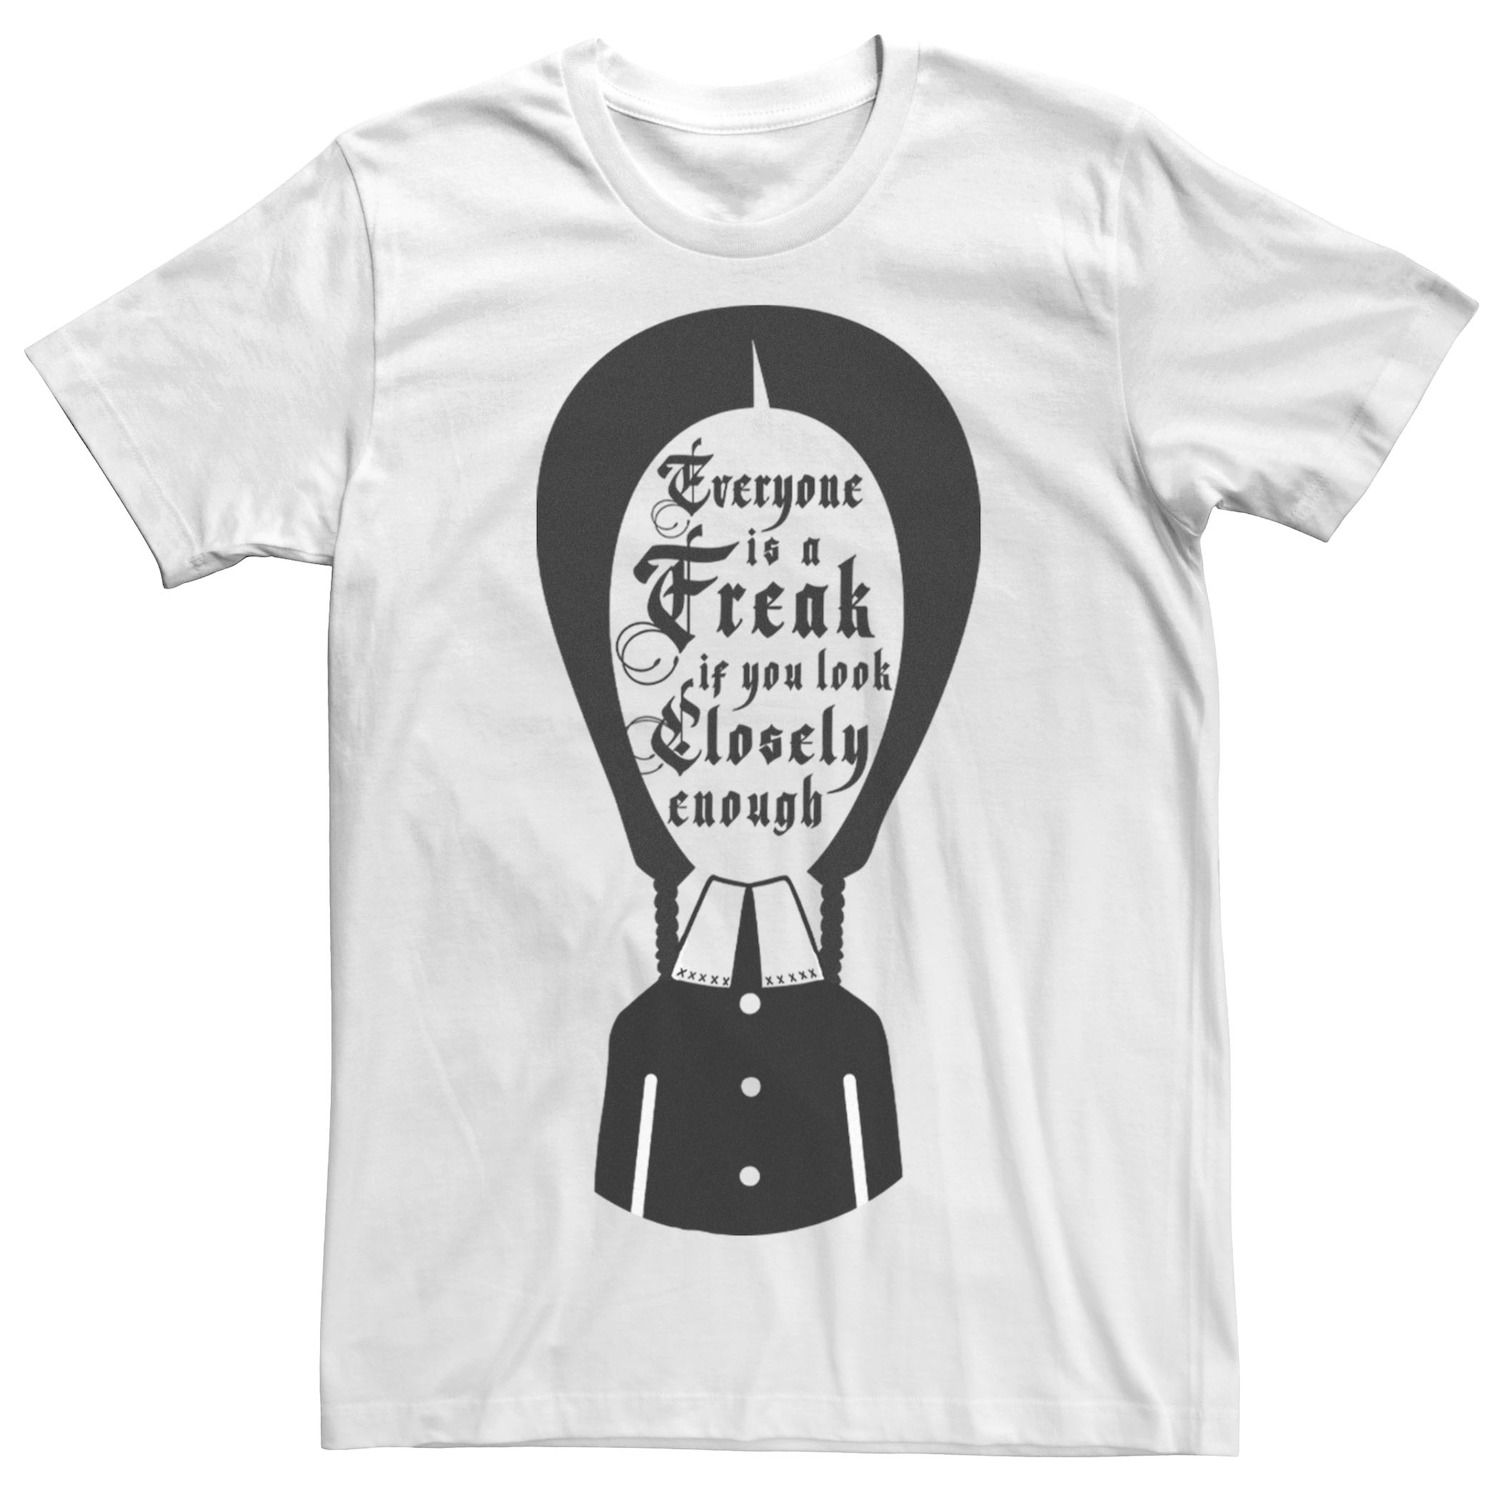 Мужская футболка Addams Family Wednesday Addams с рисунком силуэта «Everybody Is A Freak» Licensed Character цена и фото